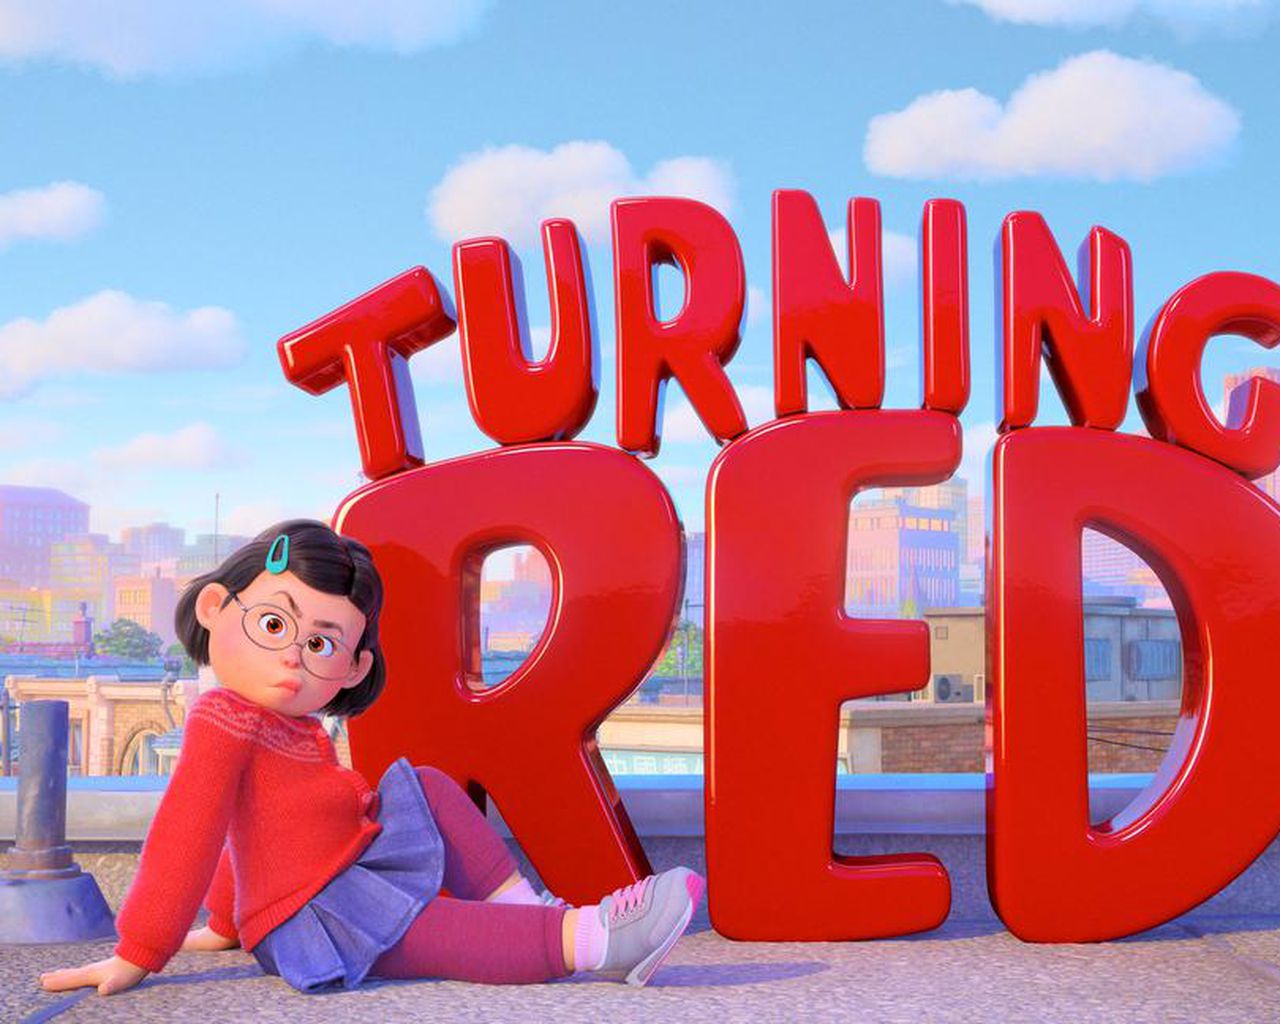 Disney Turning Red Wallpapers